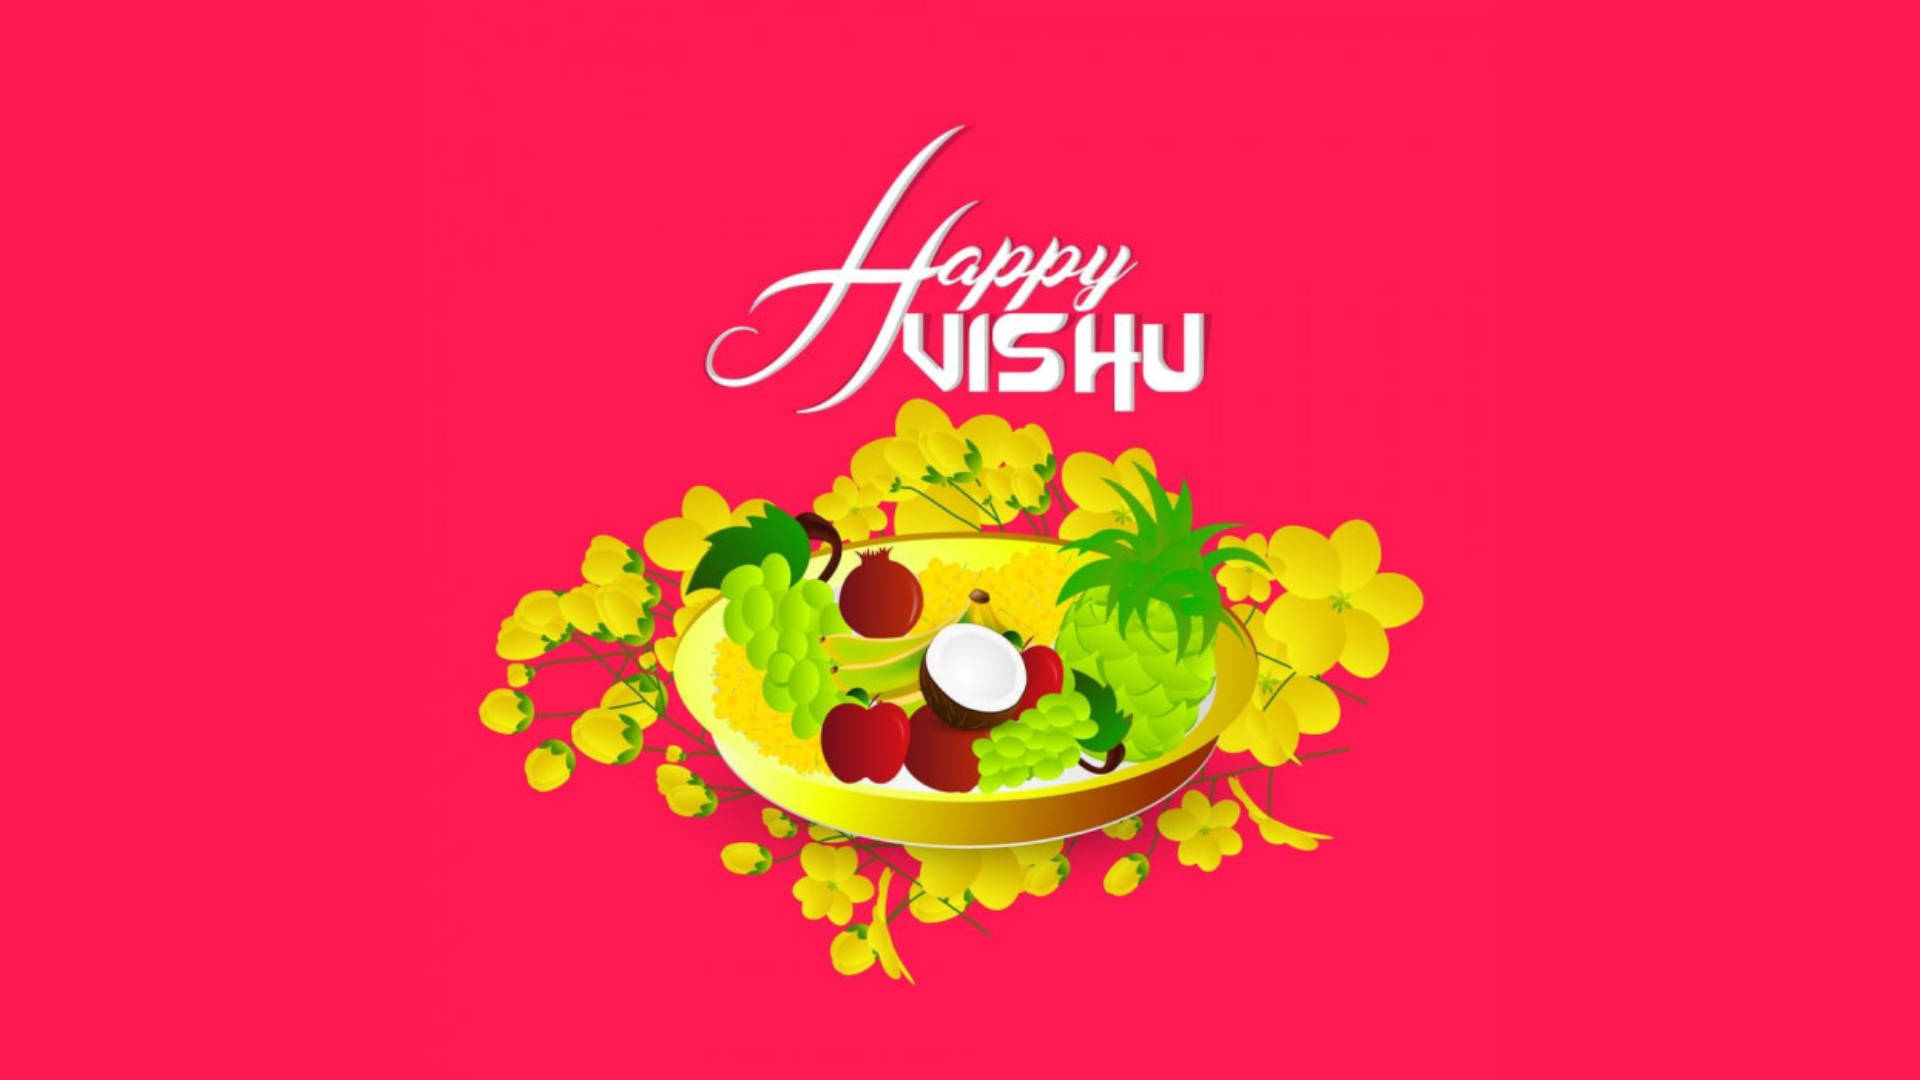 Download Happy Vishu Greeting On Bright Pink Background Wallpaper |  